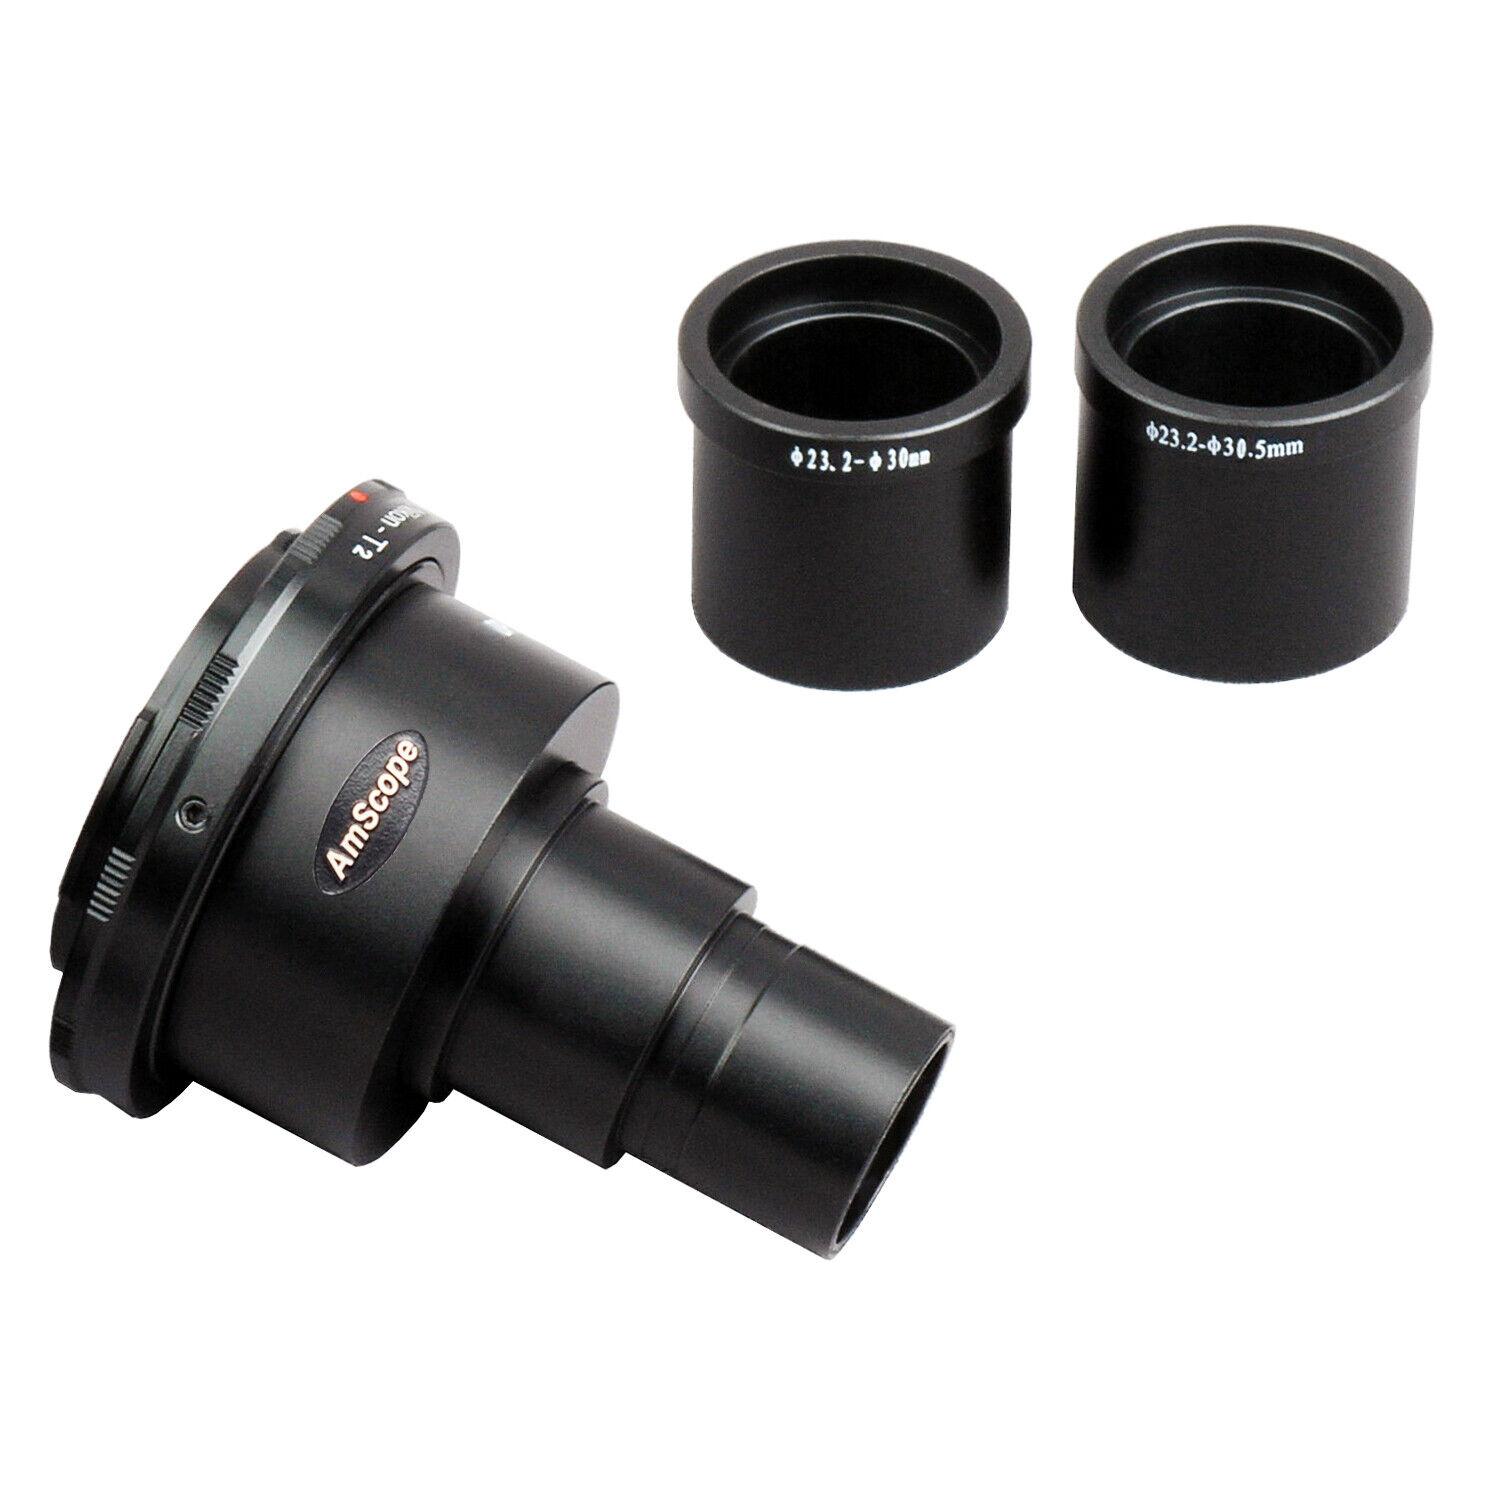 AmScope Nikon SLR/DSLR Camera Adapter for Microscopes 2X Magnification Power